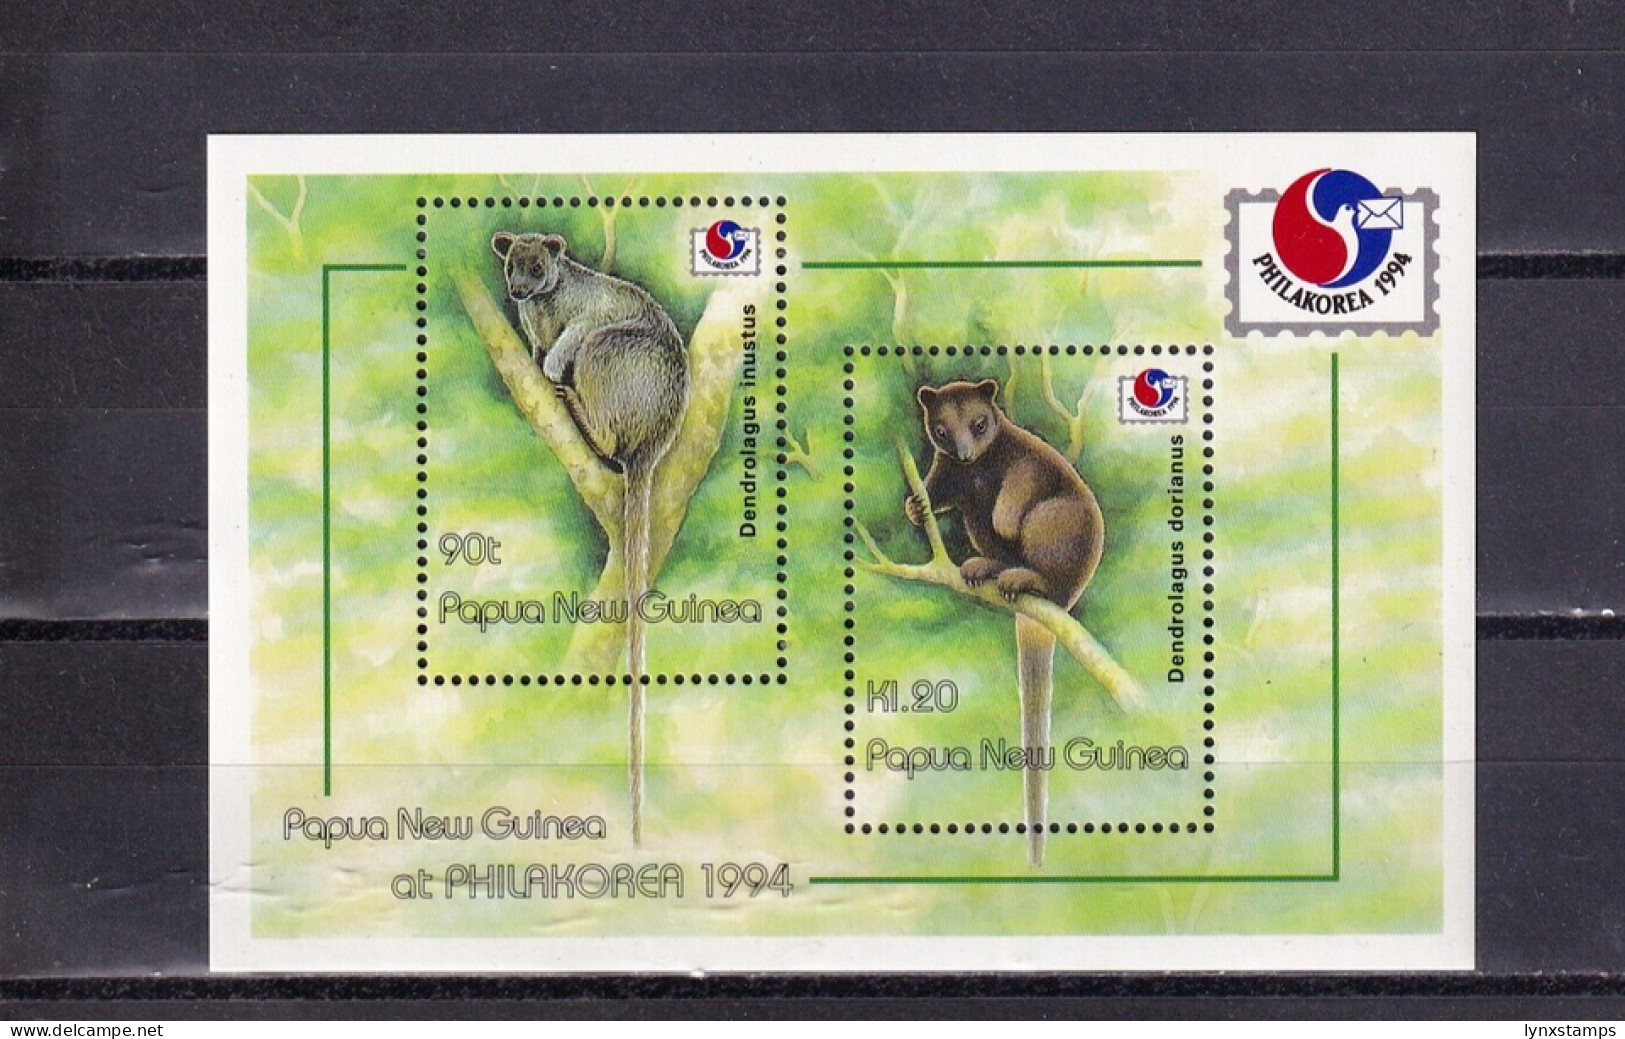 SA04 Papua New Guinea 1994 Inter Stamp Exhibition "Phila Korea '94" Minisheet - Papua New Guinea